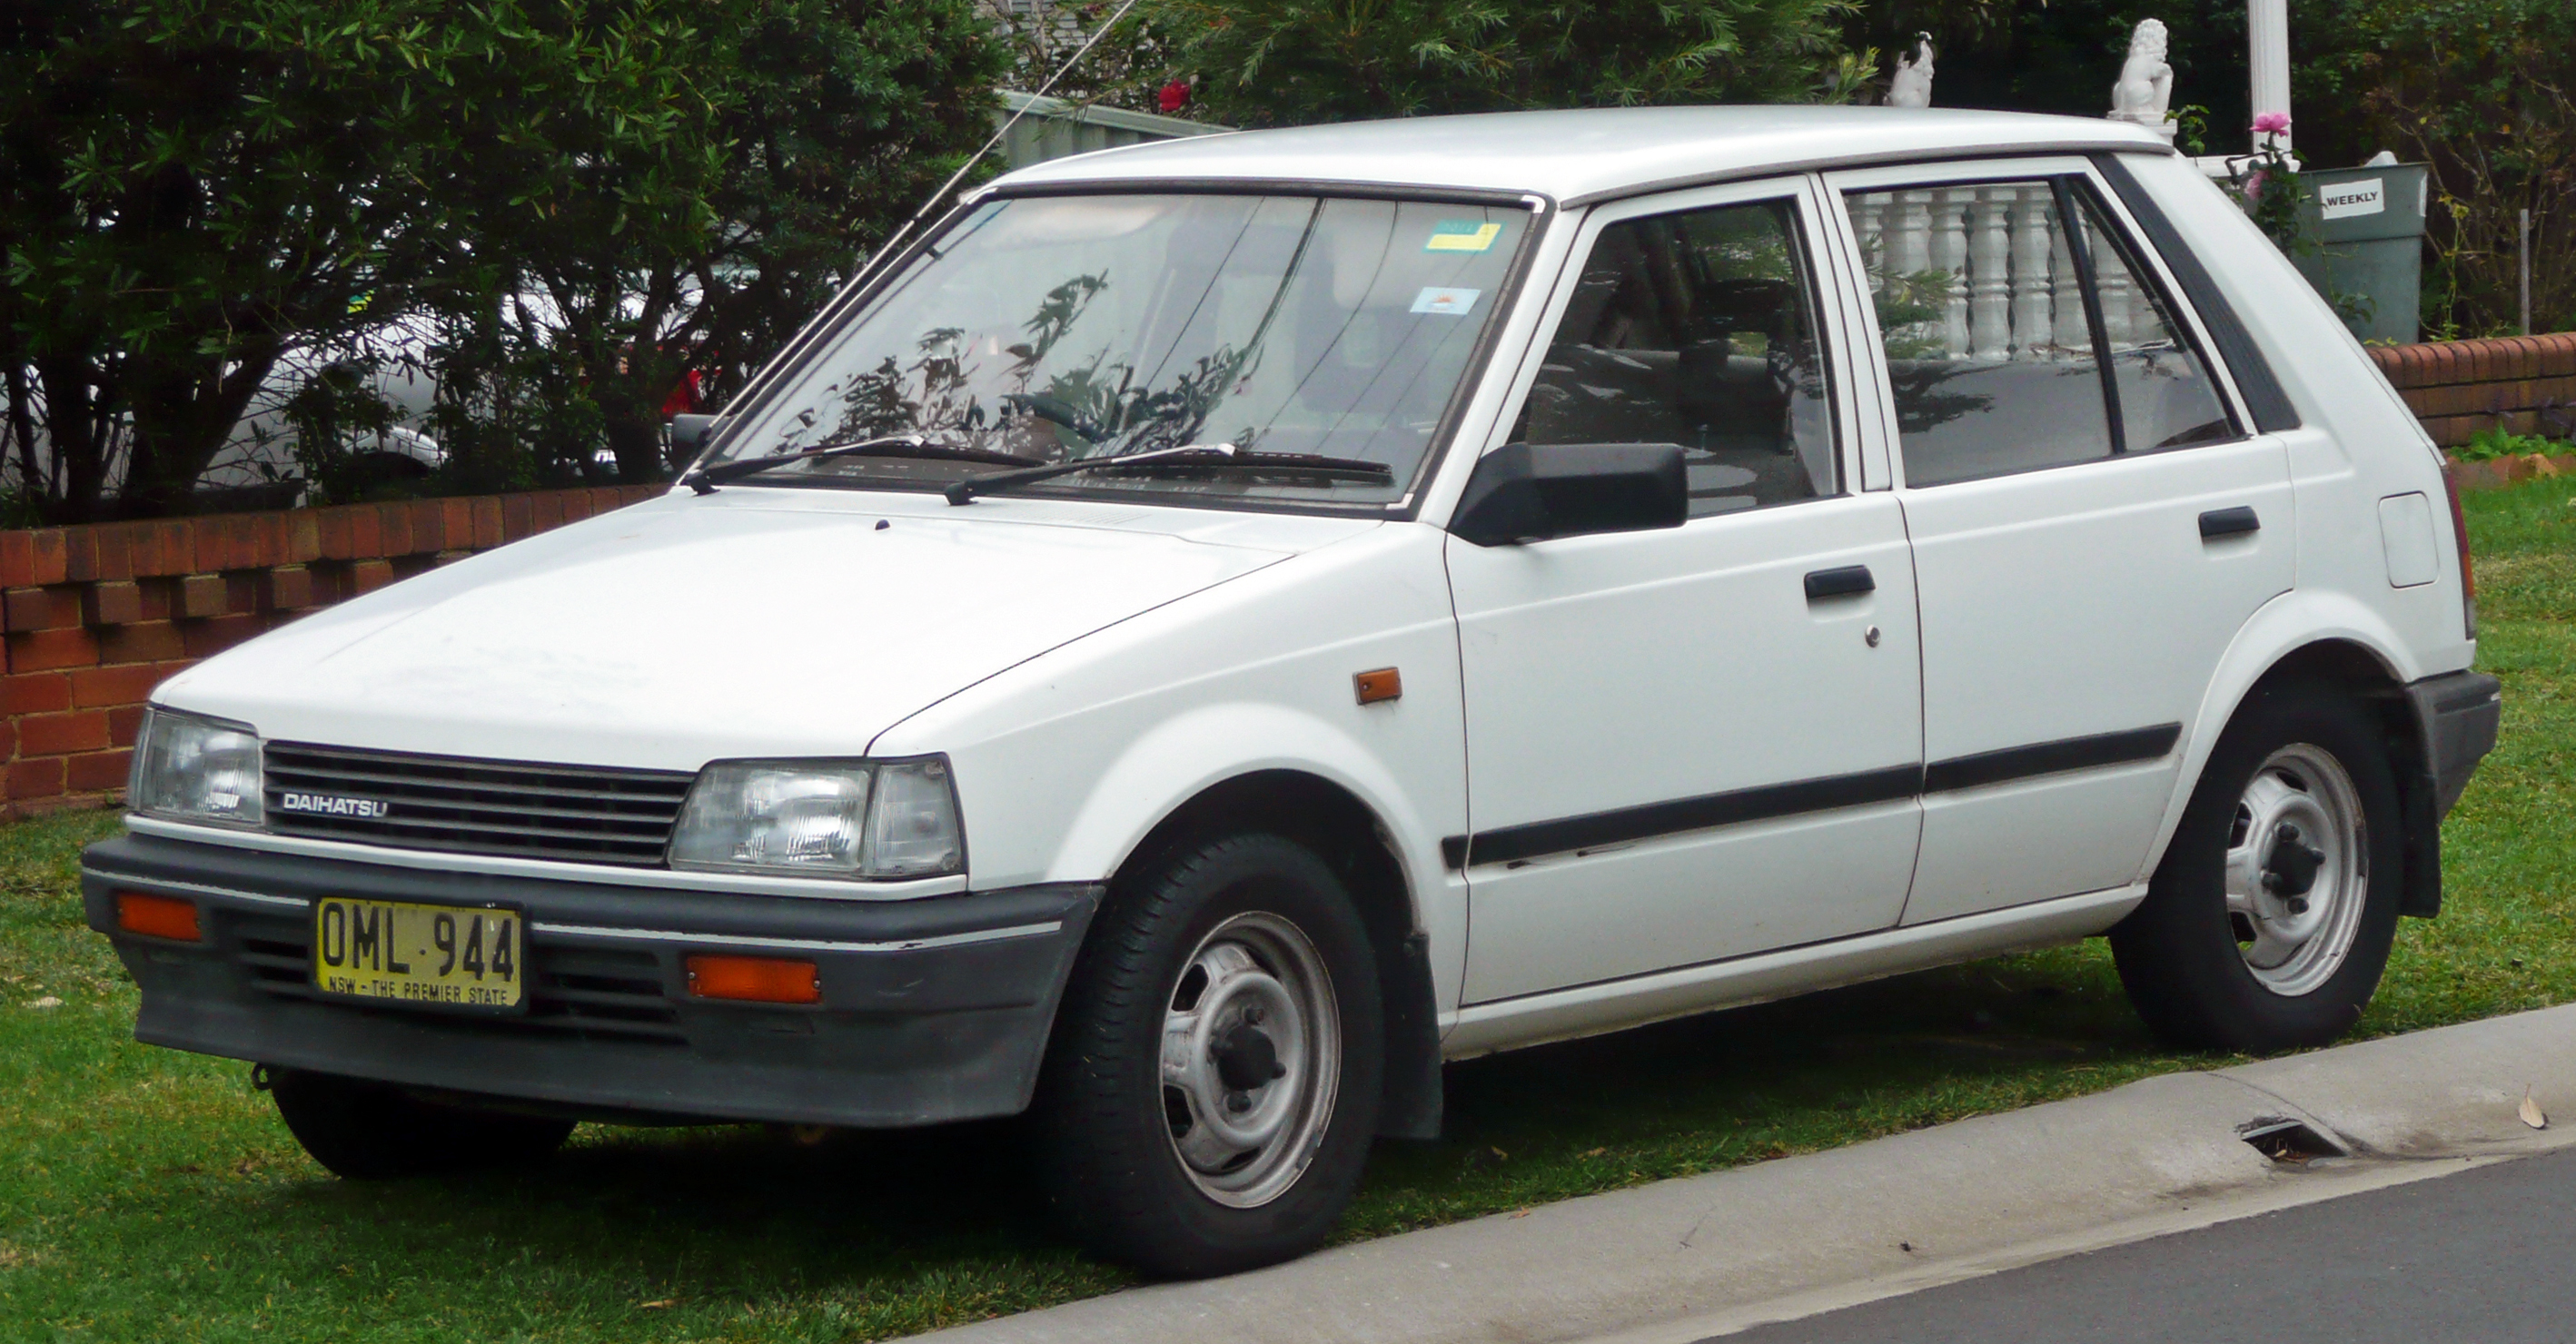 Daihatsu Charade 2nd Generation Exterior Front Side View